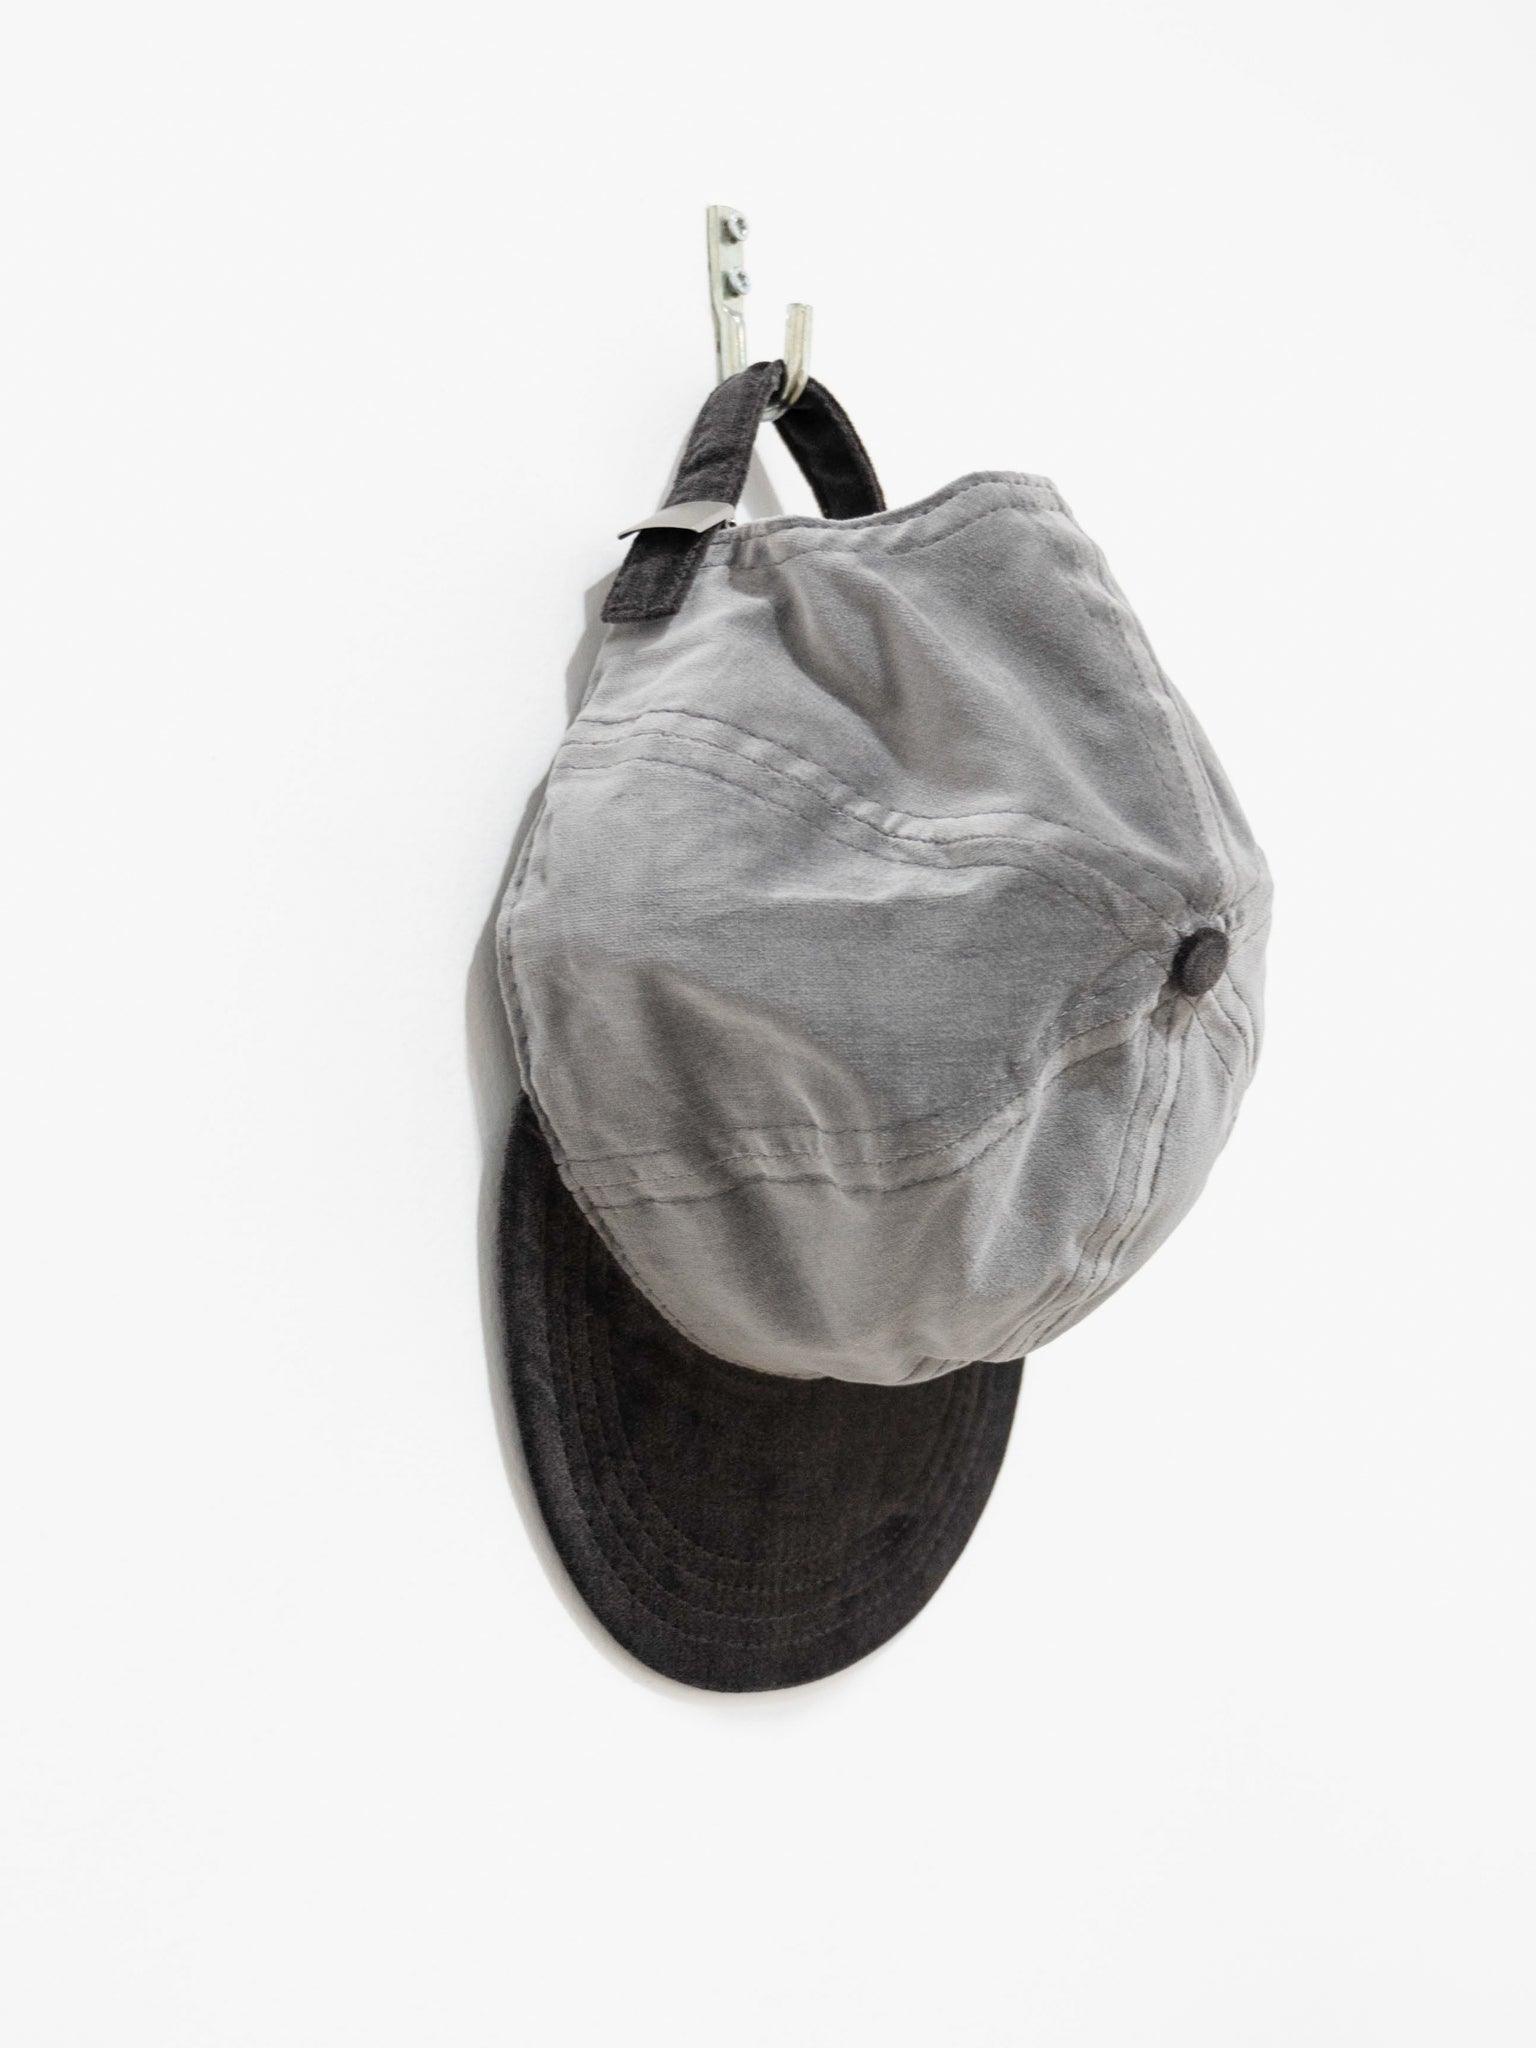 Namu Shop - paa Floppy Ball Cap - Gray Charcoal